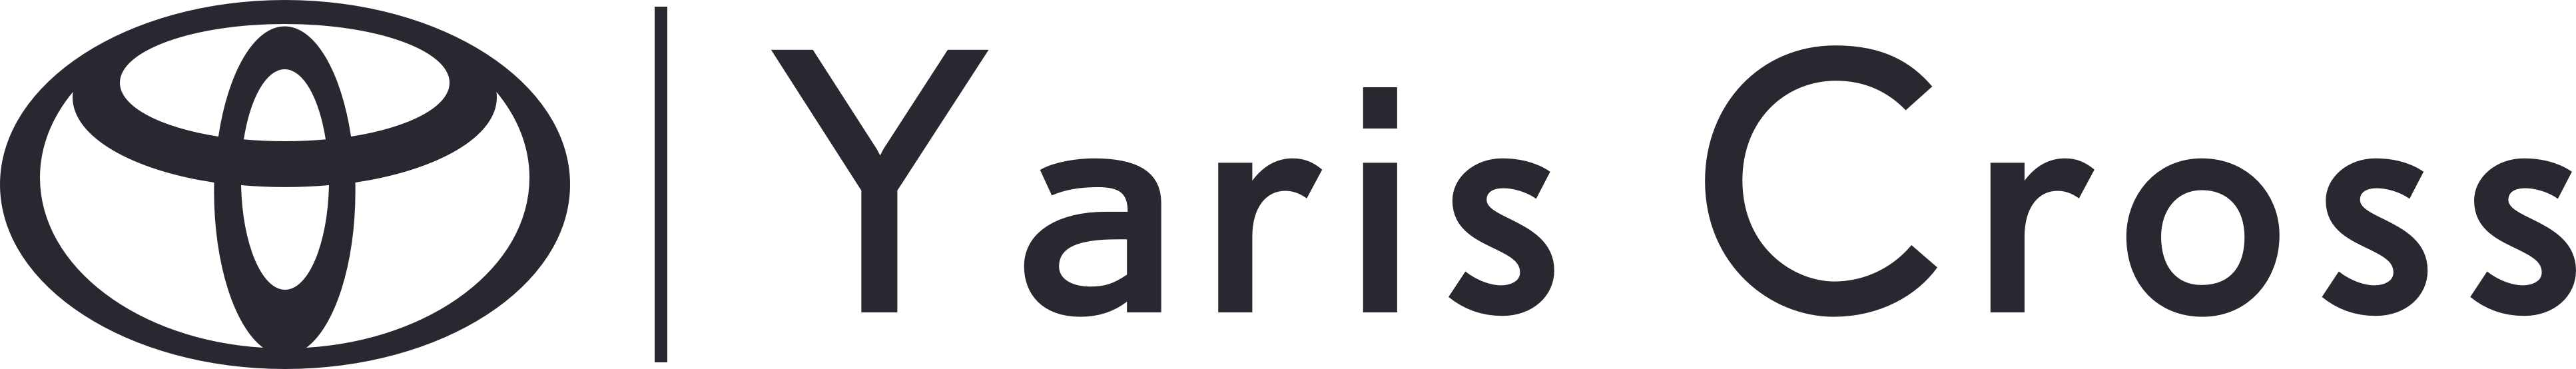 Logotipo Toyota Yaris Cross